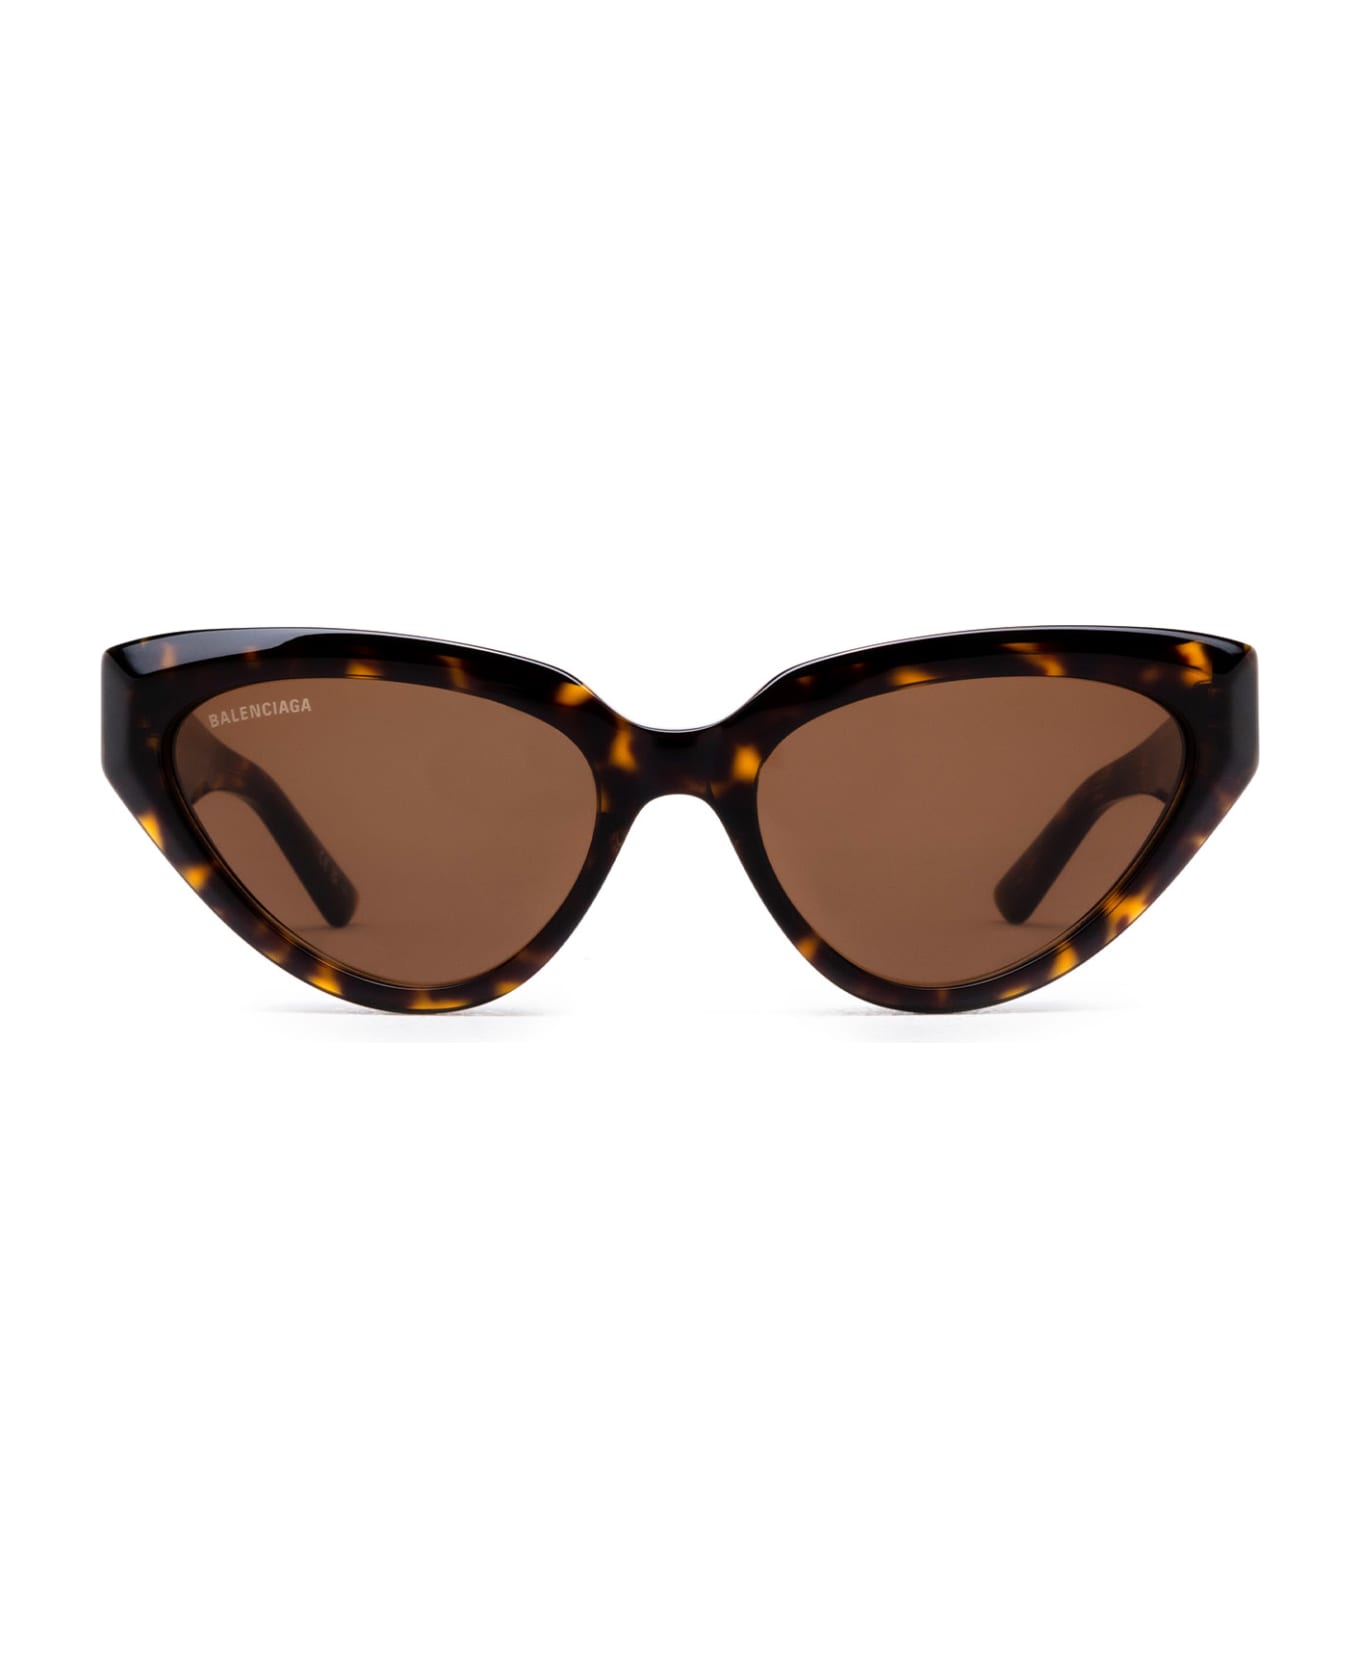 Balenciaga Eyewear Bb0270s Sunglasses - Havana サングラス